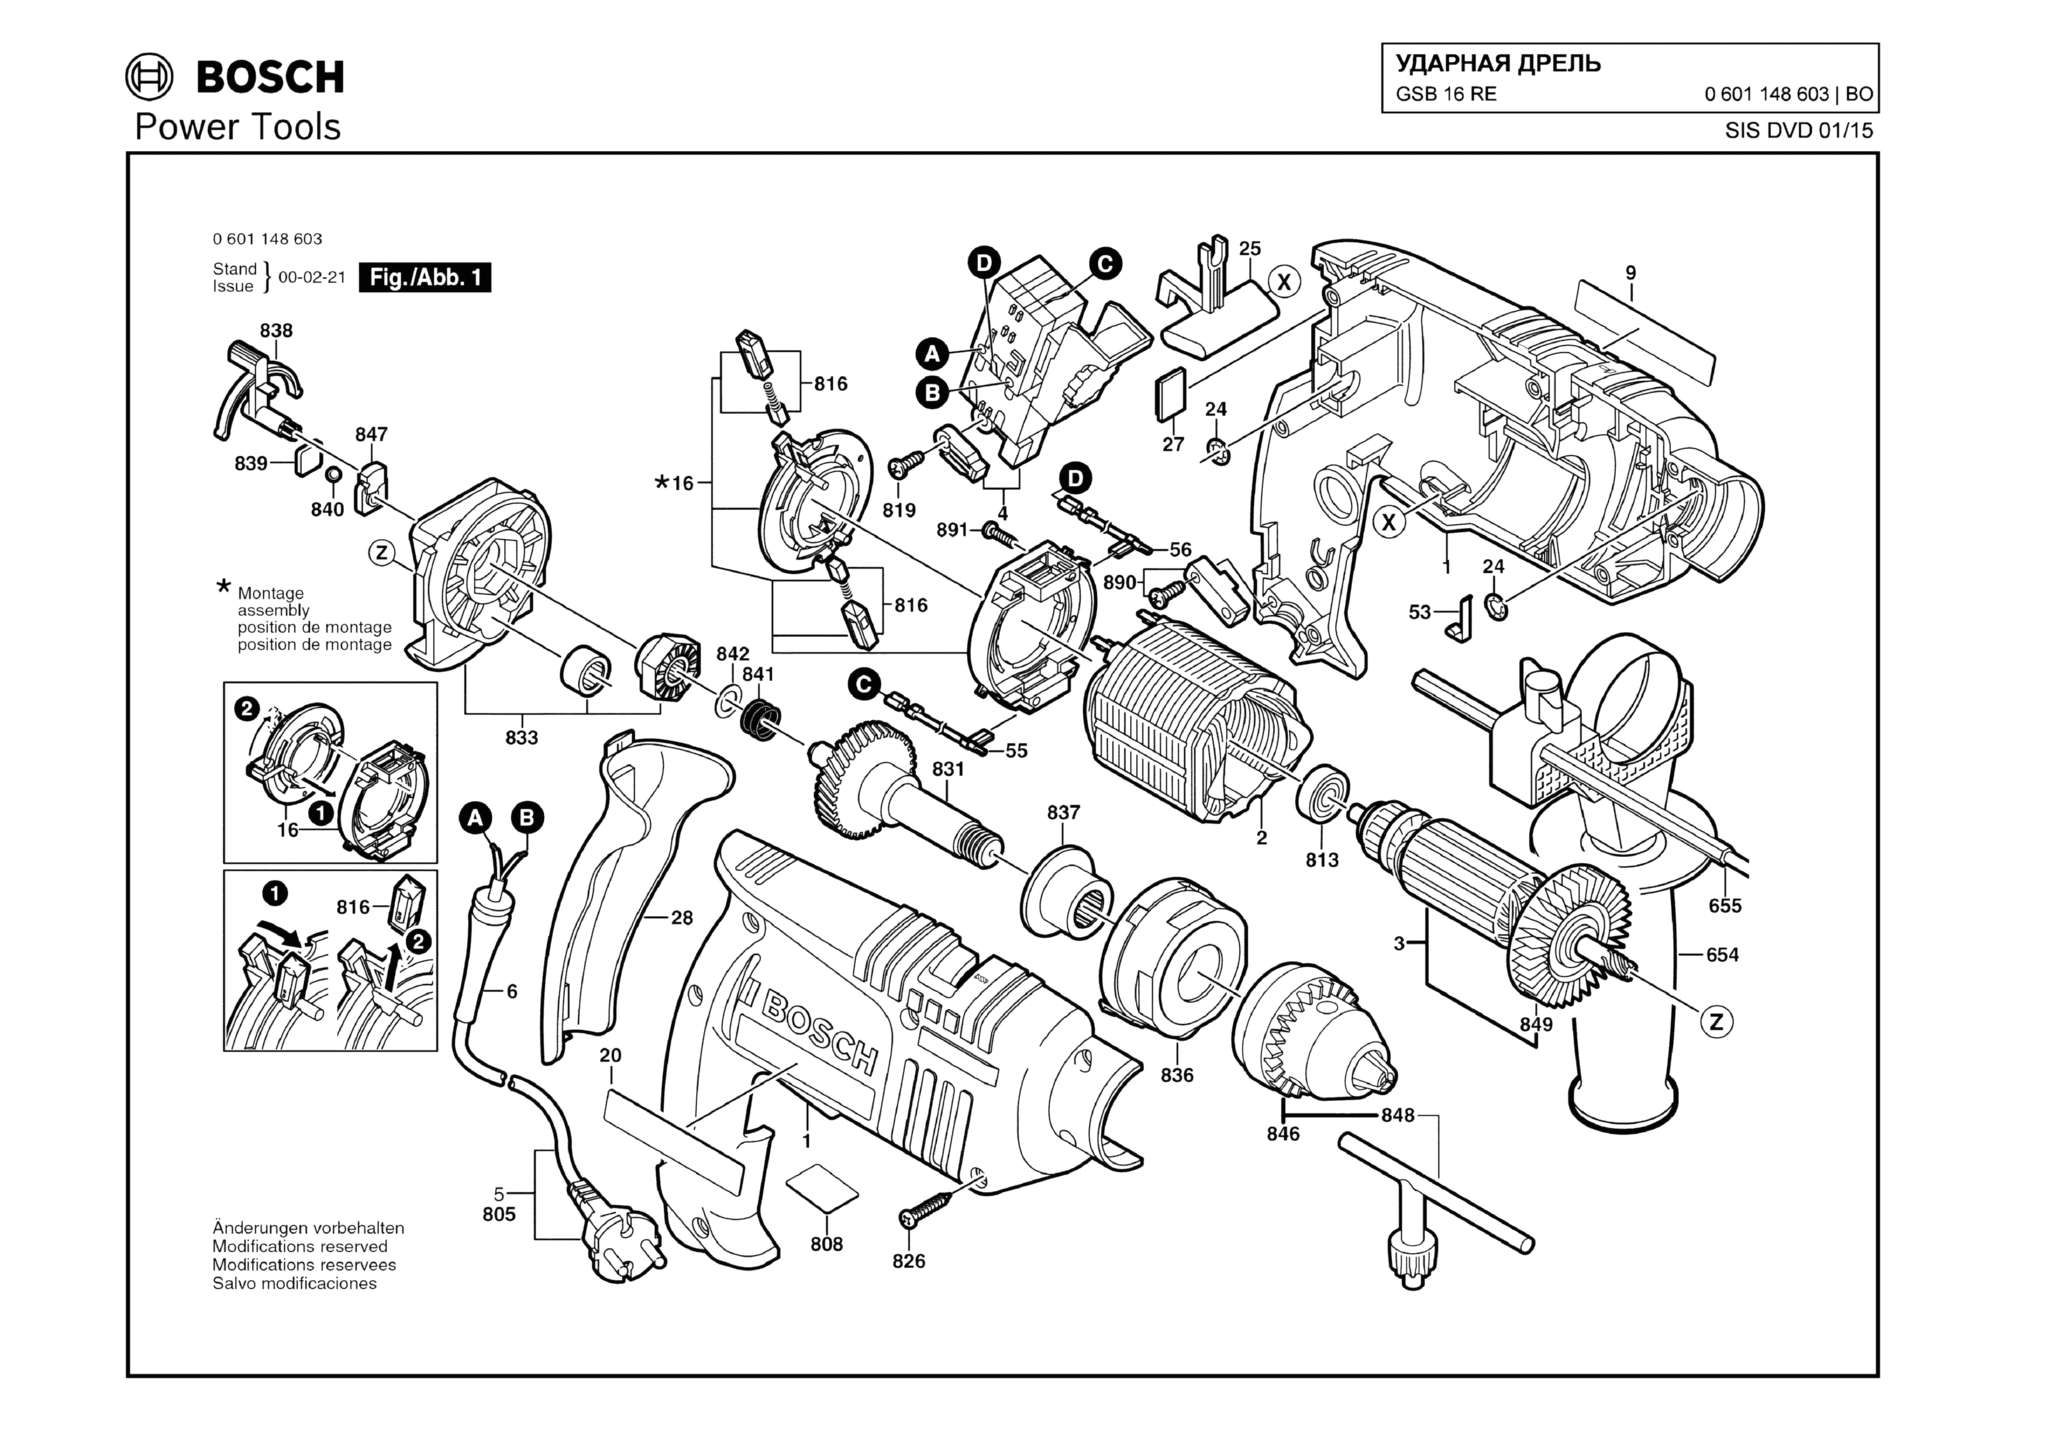 Запчасти, схема и деталировка Bosch GSB 16 RE (ТИП 0601148603)